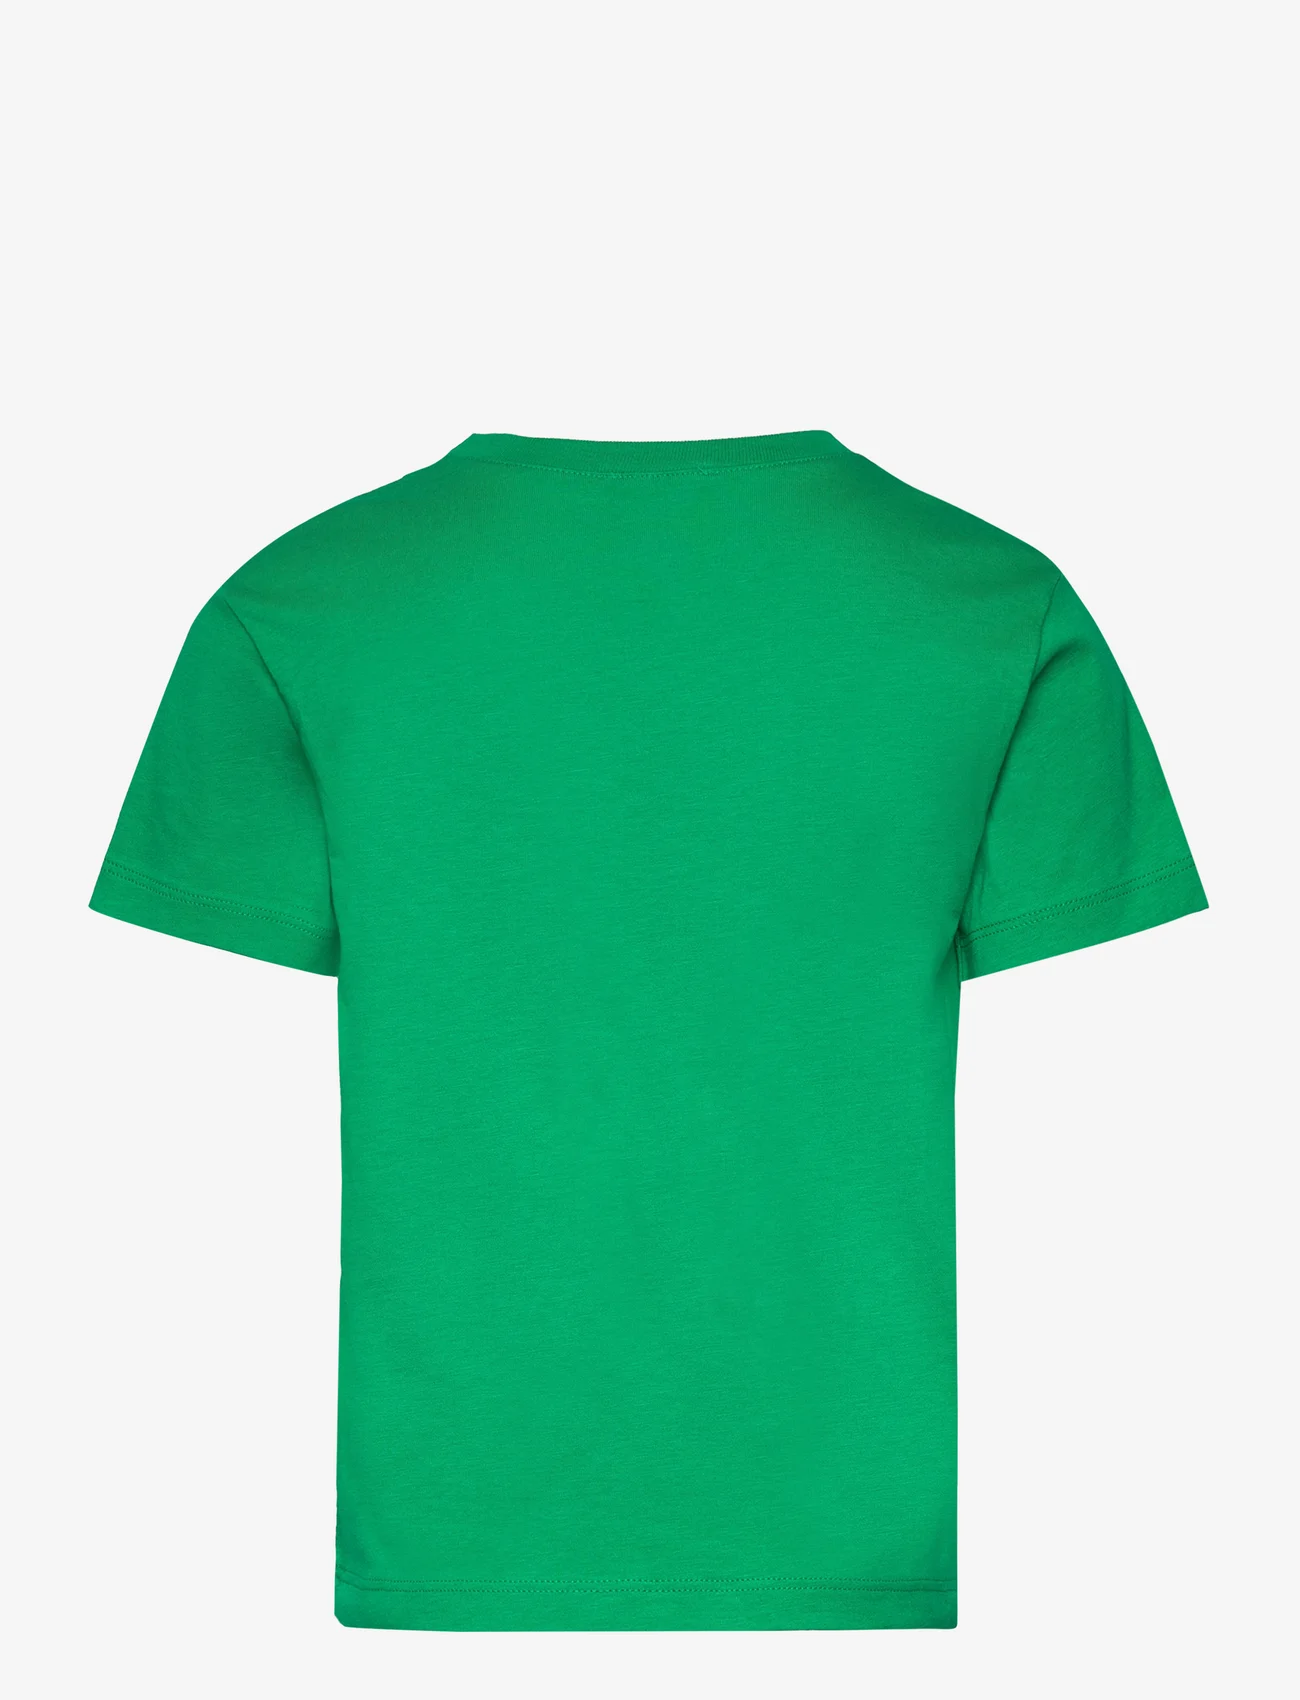 United Colors of Benetton - T-SHIRT - kurzärmelige - intense green - 1